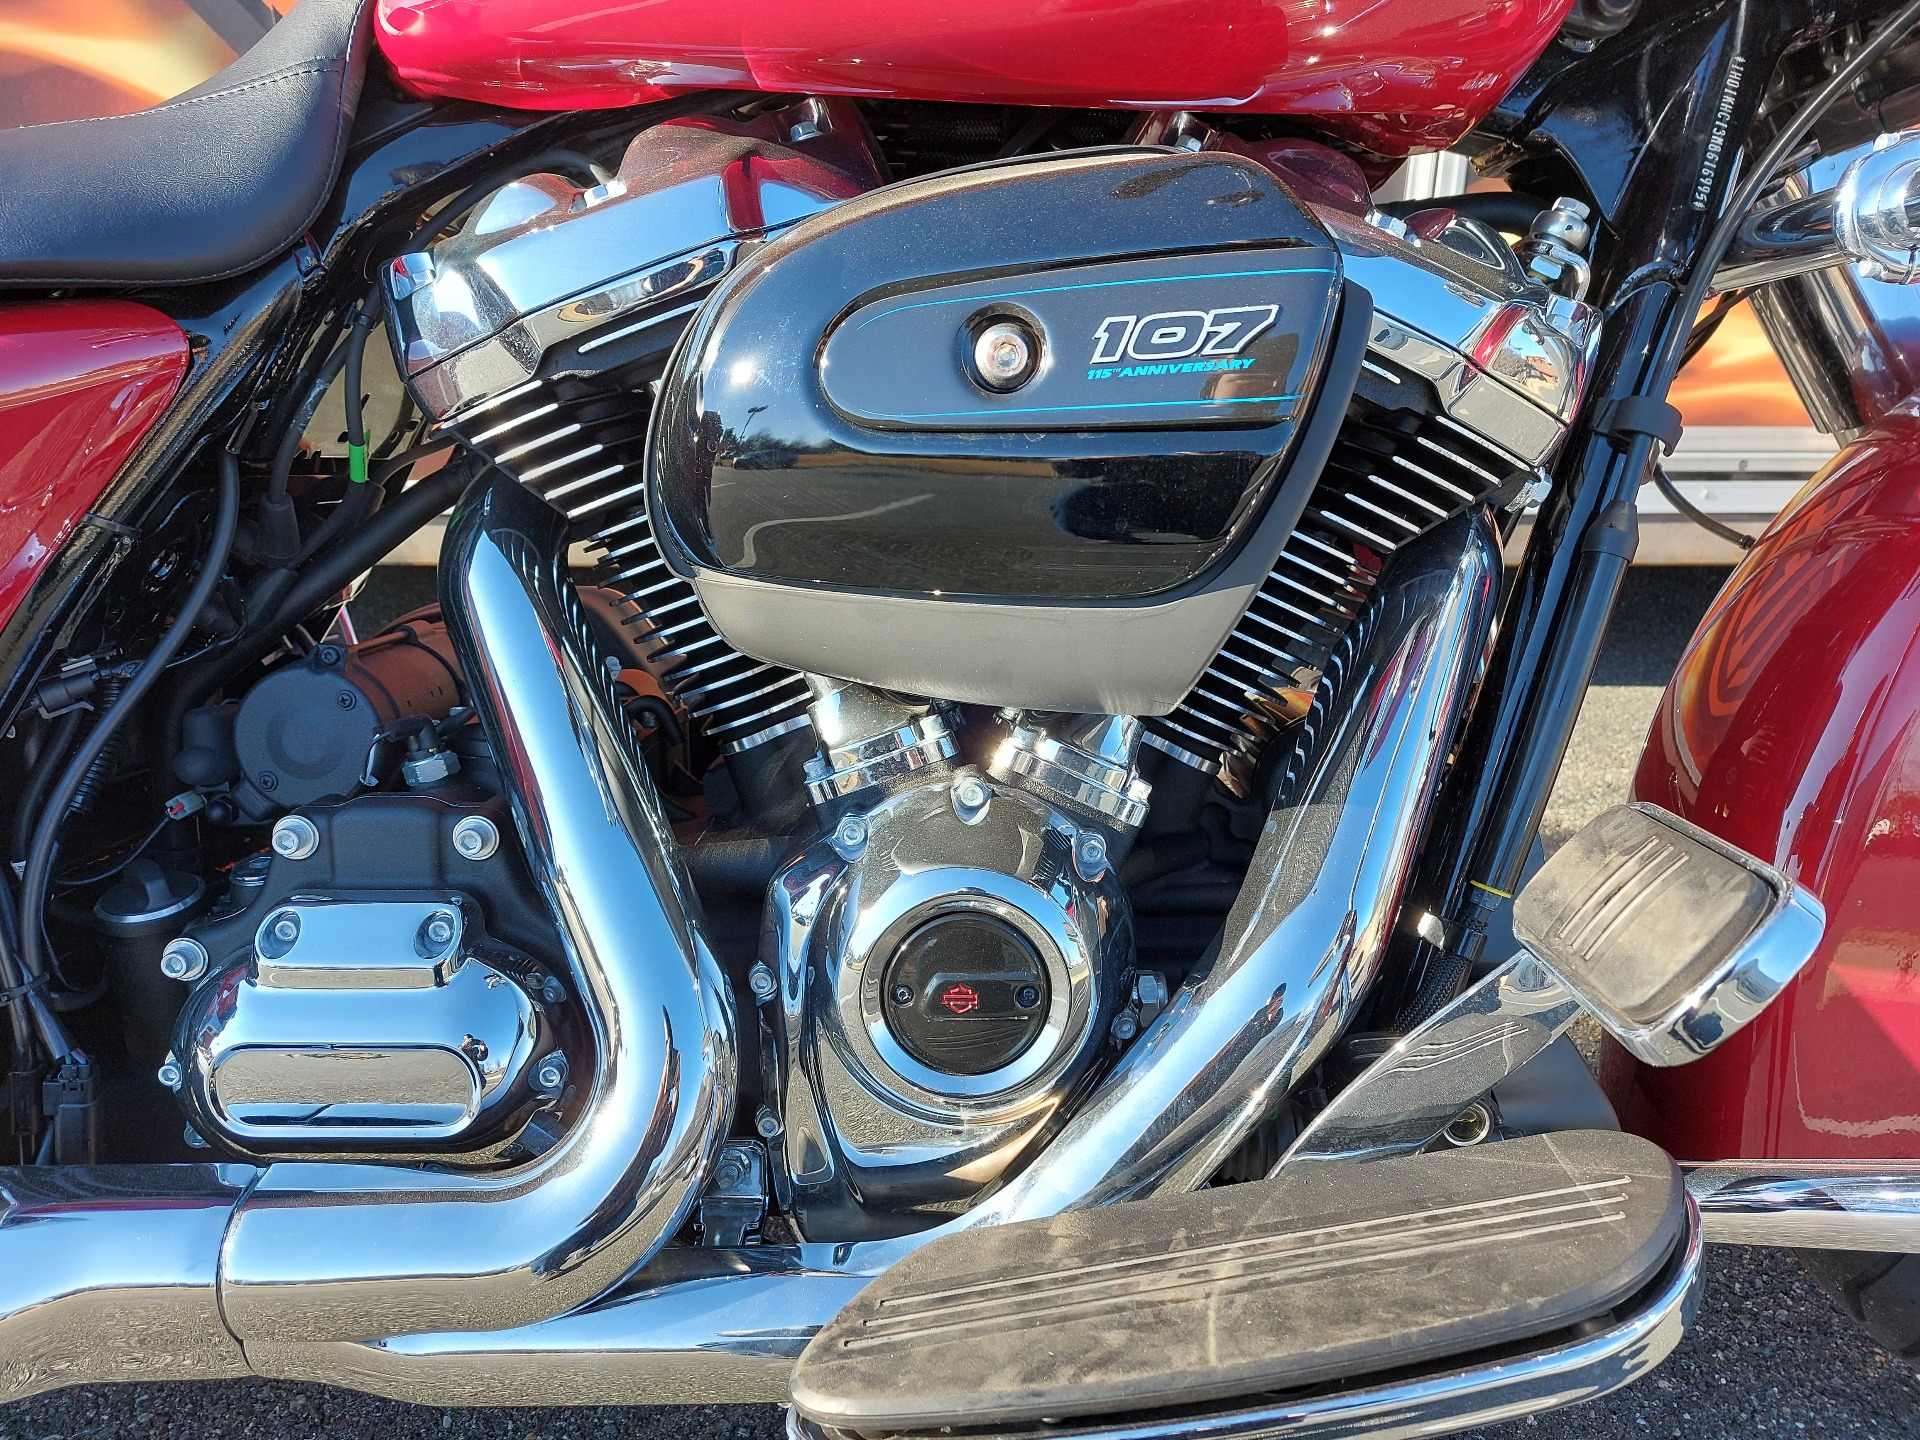 2021 Harley-Davidson Road Glide® in Fredericksburg, Virginia - Photo 9